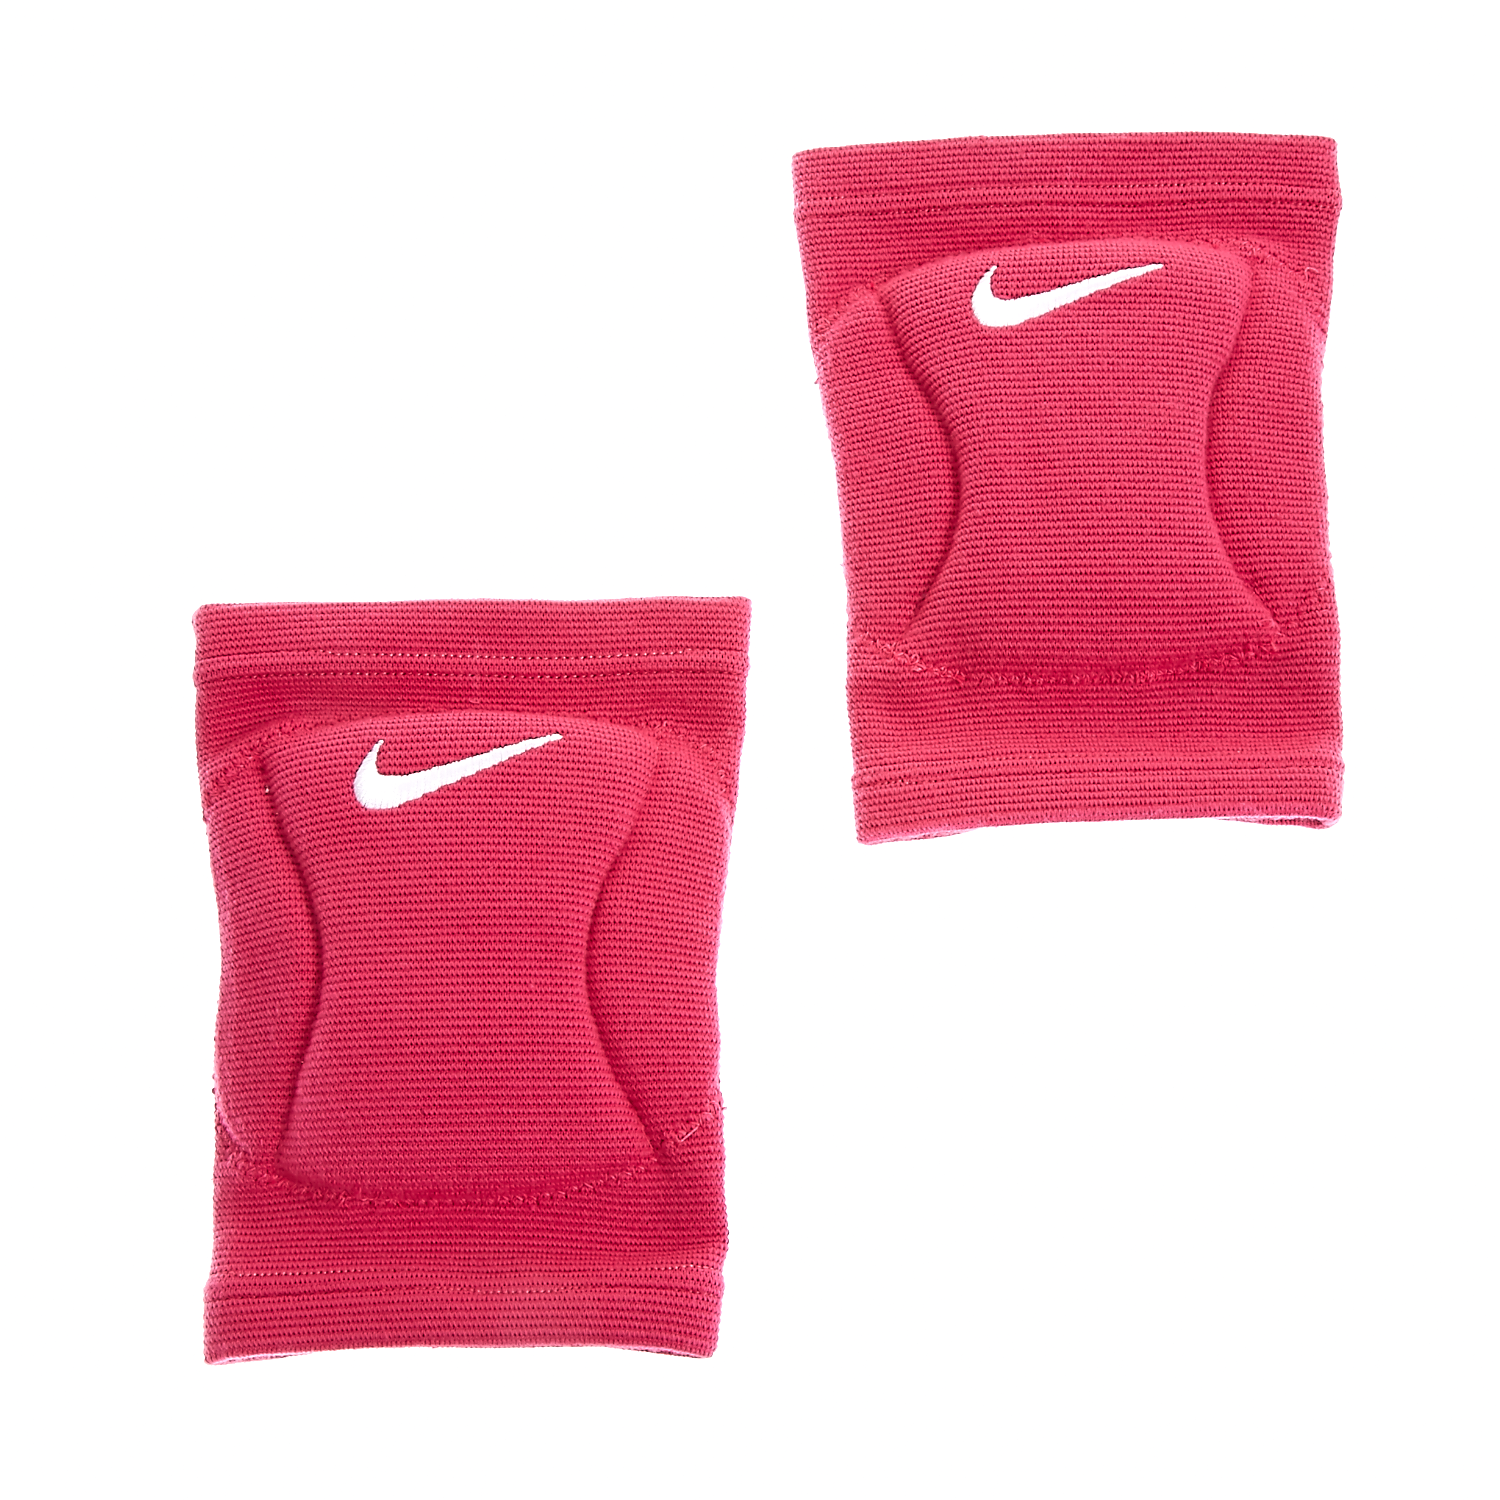 NIKE ACCESSORIES NIKE - Επιγονατίδες Nike ροζ